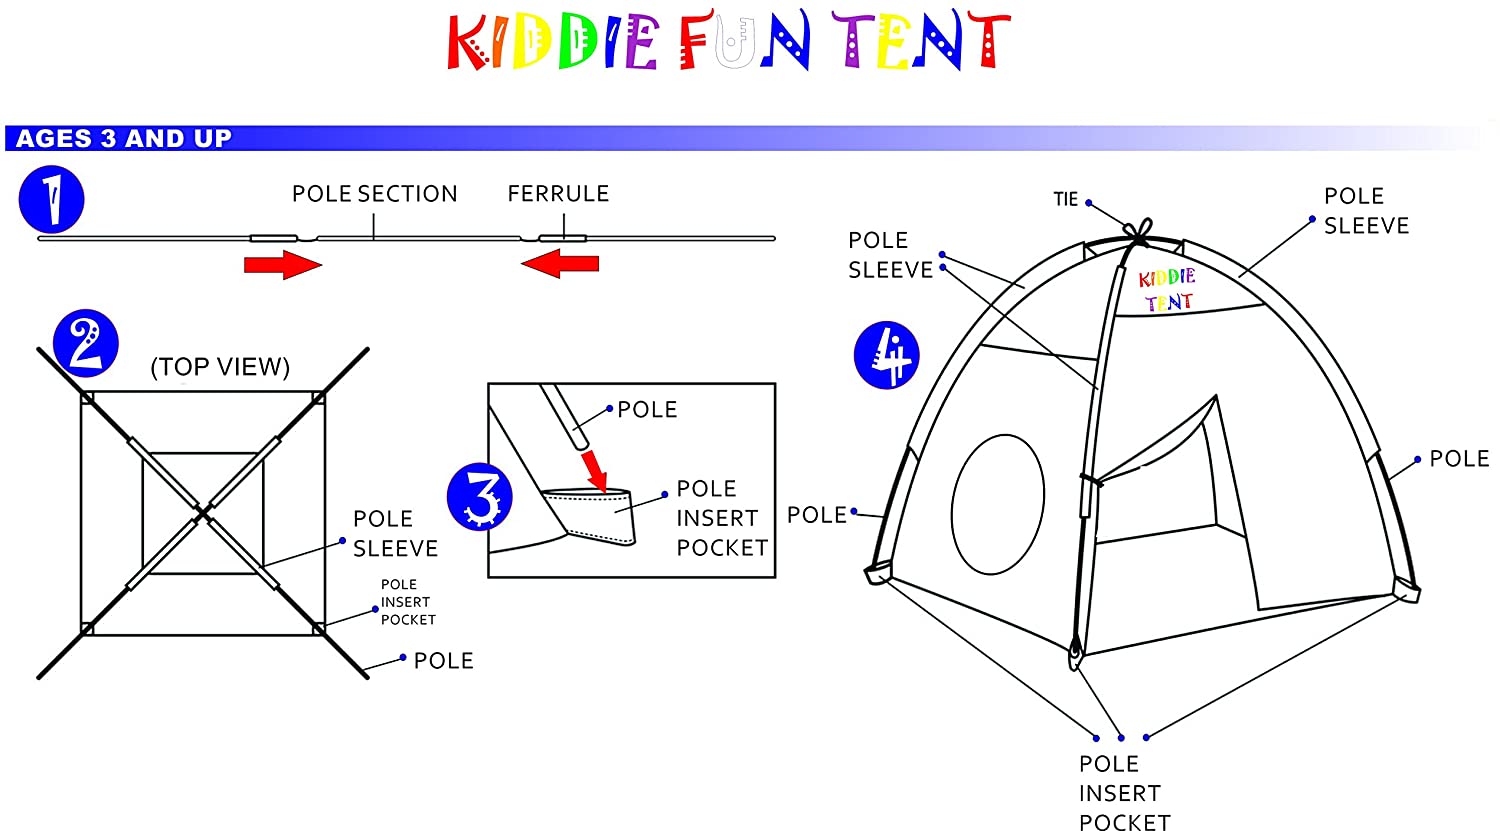 NTK Super Duper Fun Kiddie Play Tent Inspires Imagination, Creativity and Sense